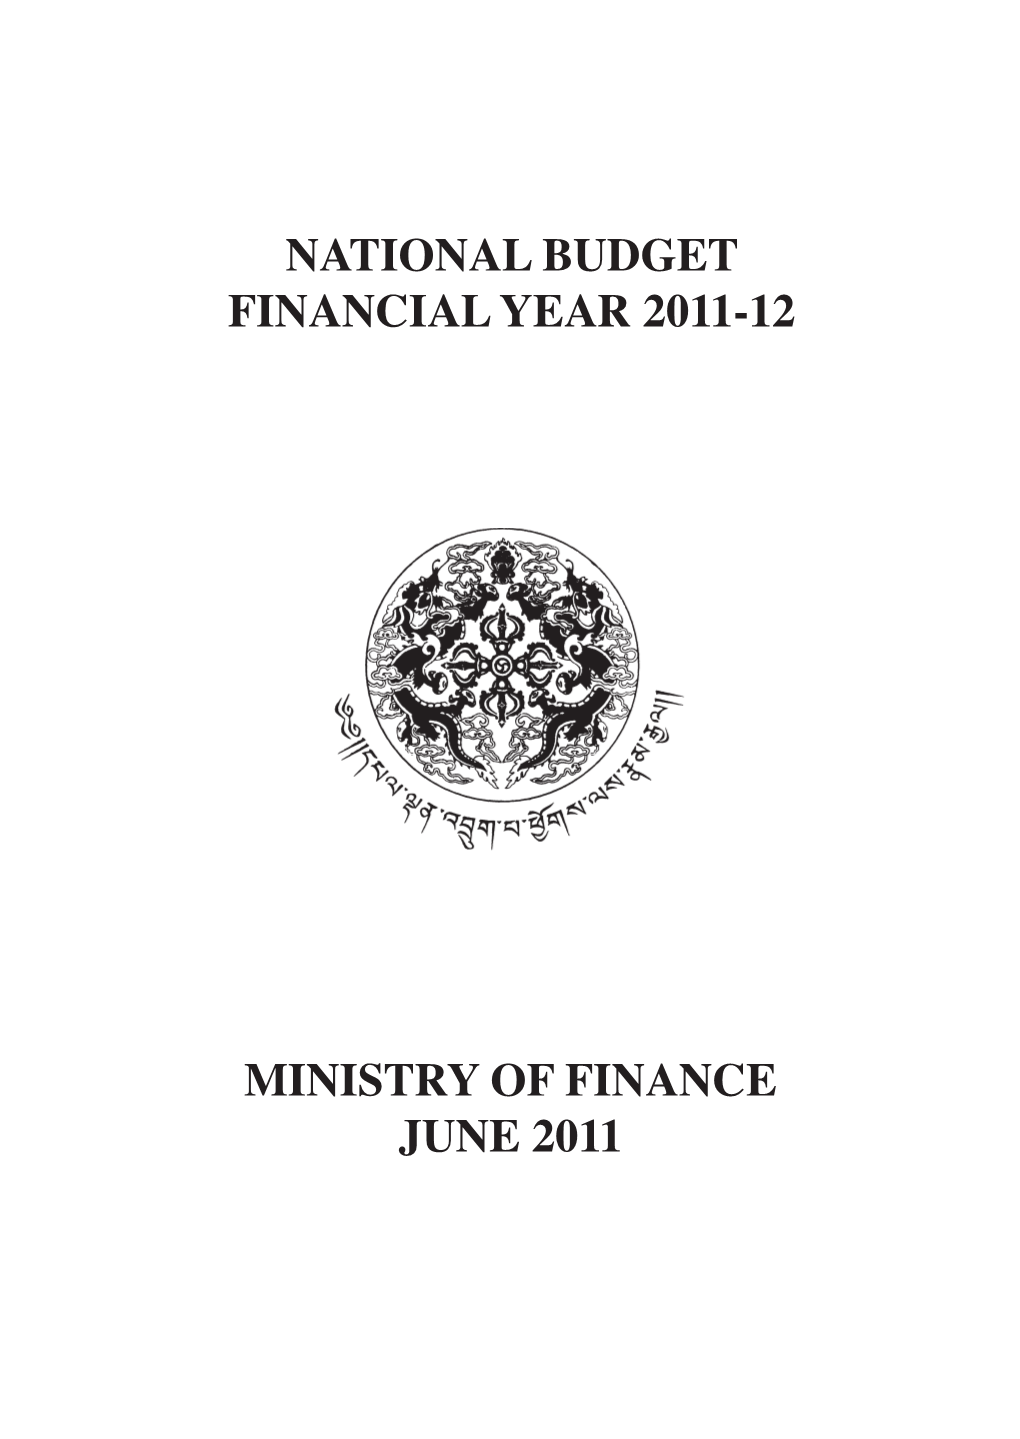 Budget Report 2011-2012